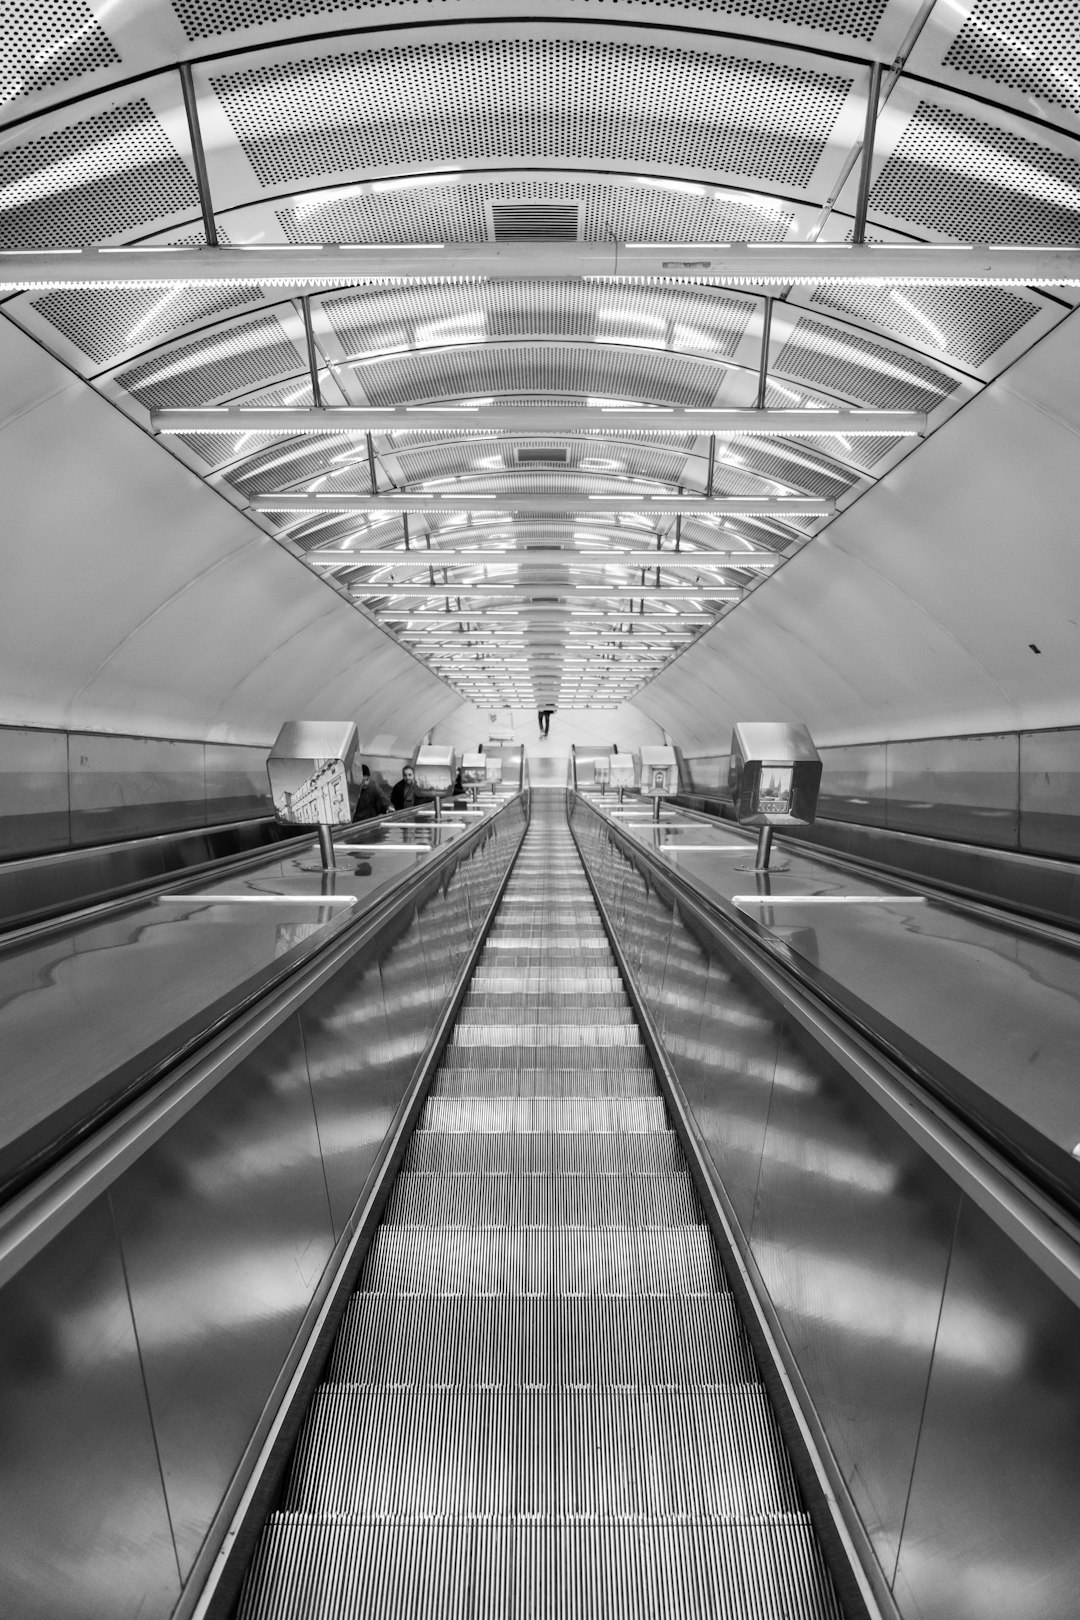 black and silver escalator in a train station